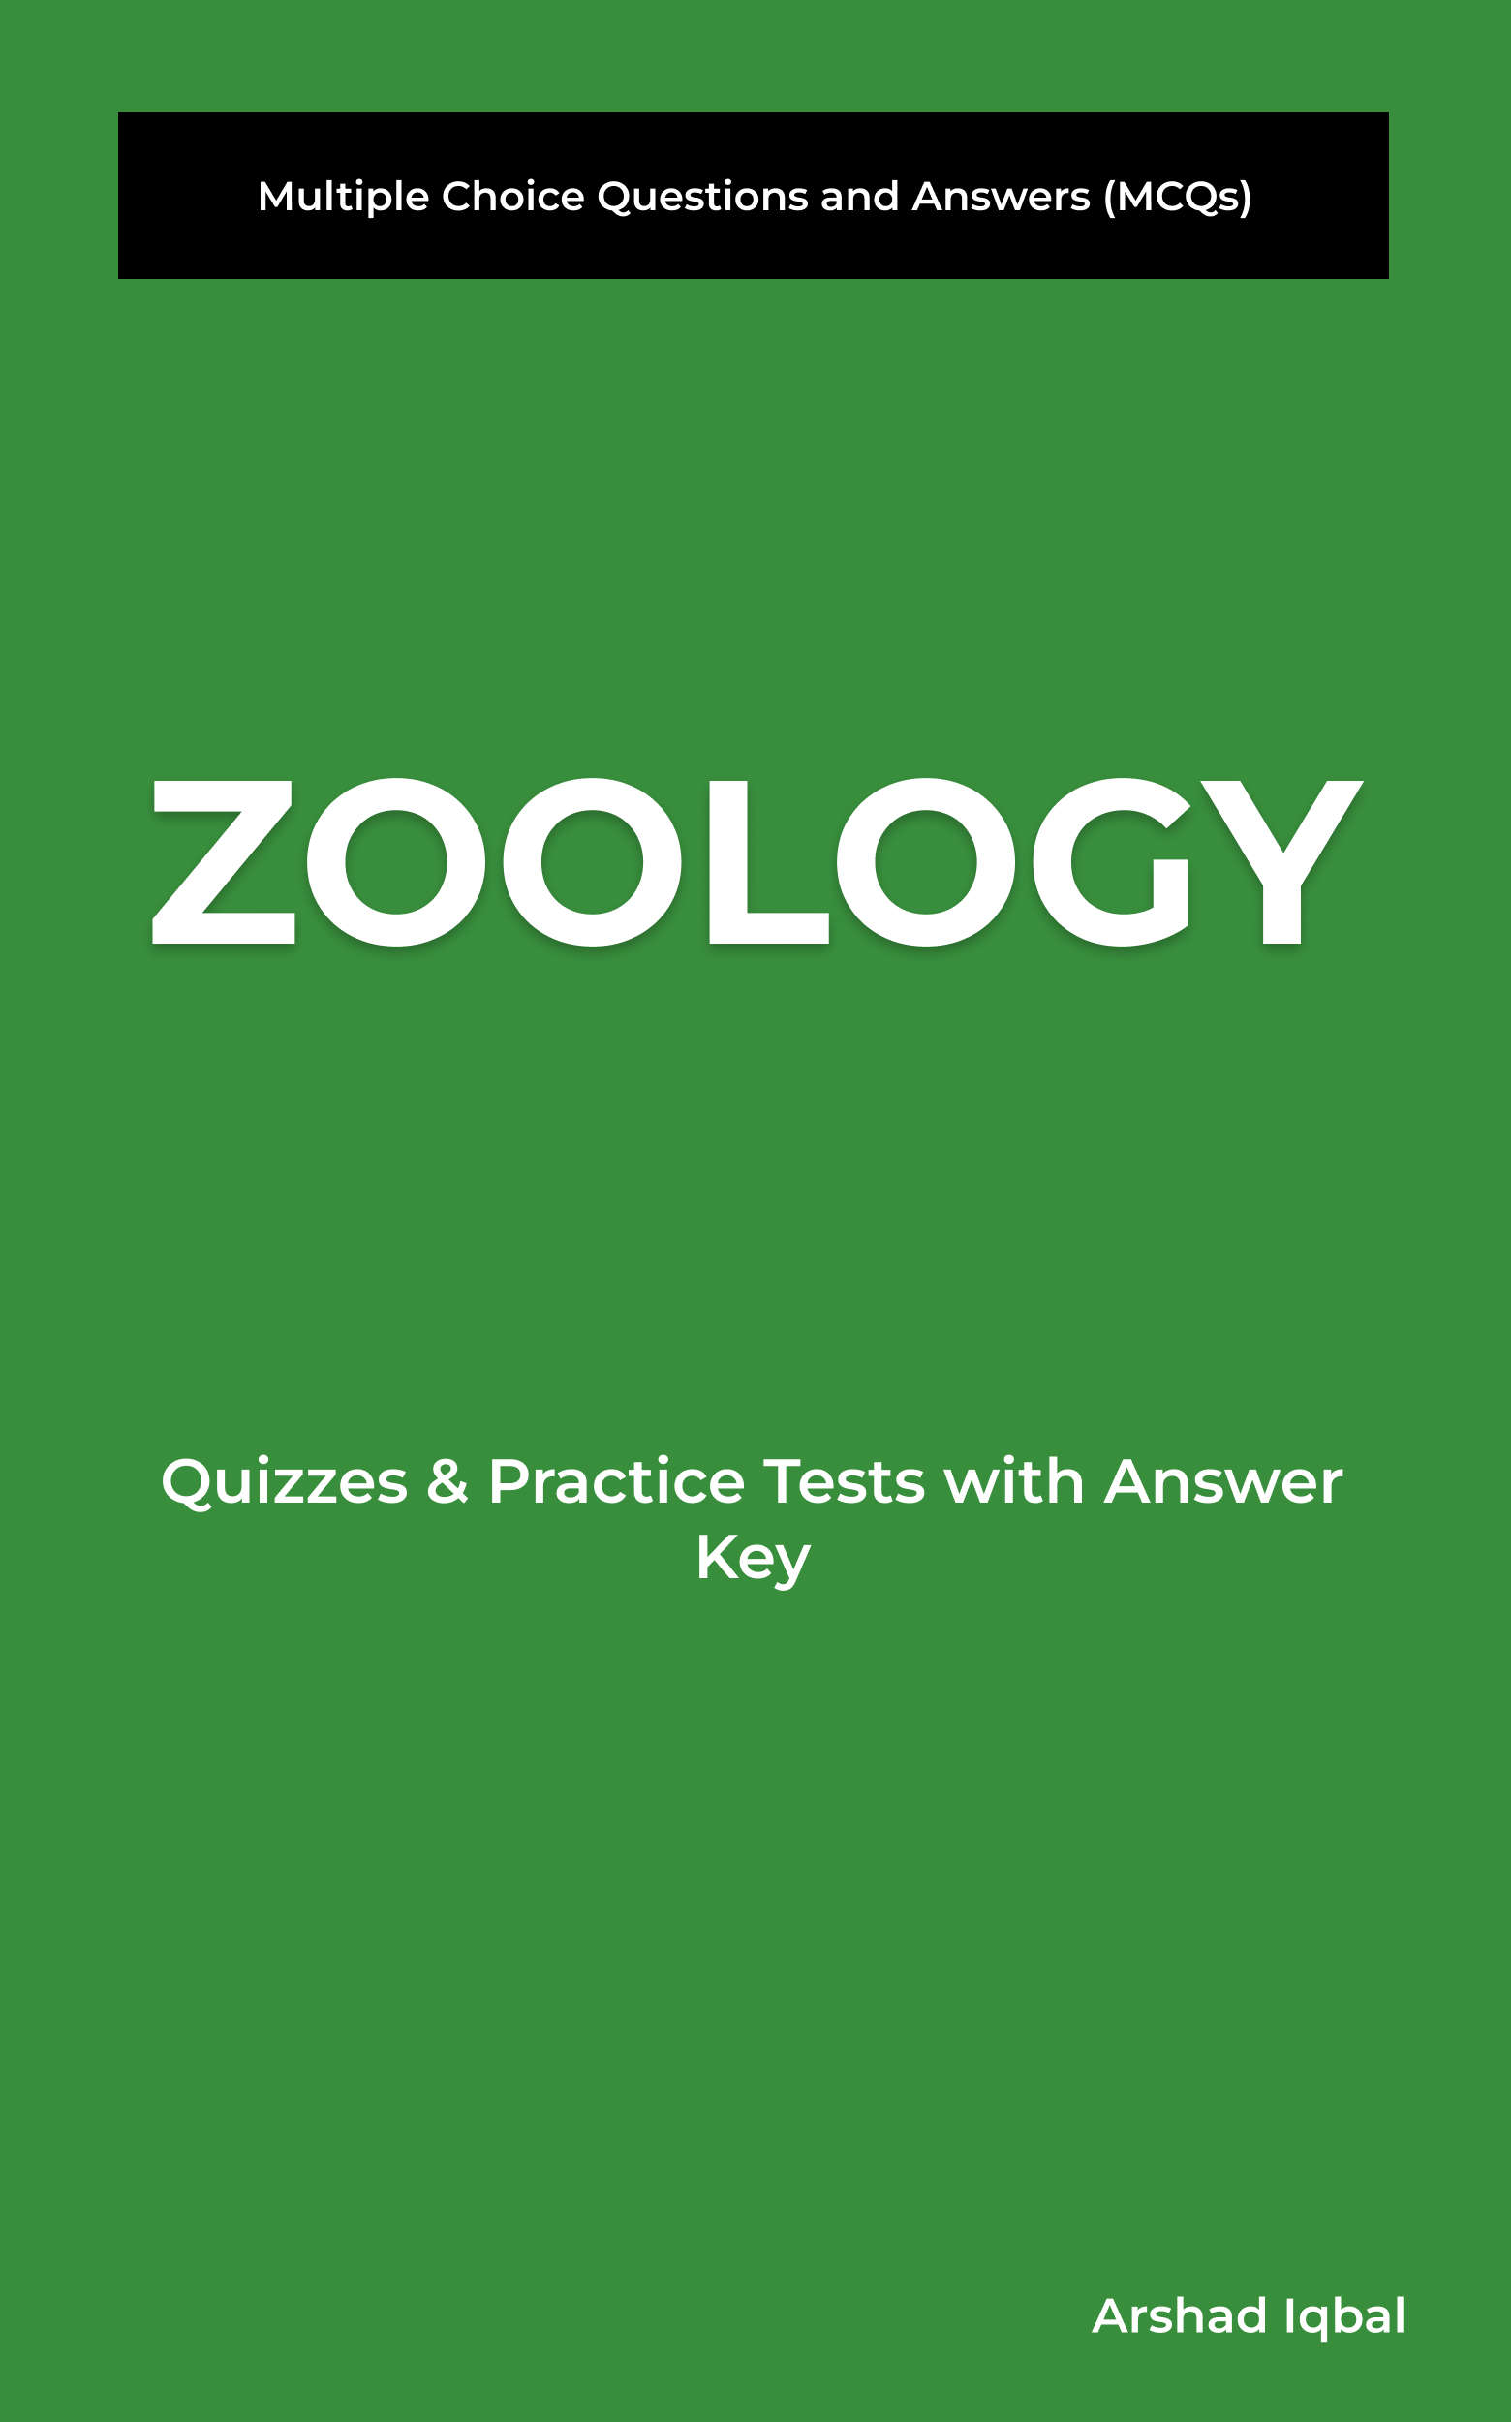 Zoology MCQ Book PDF